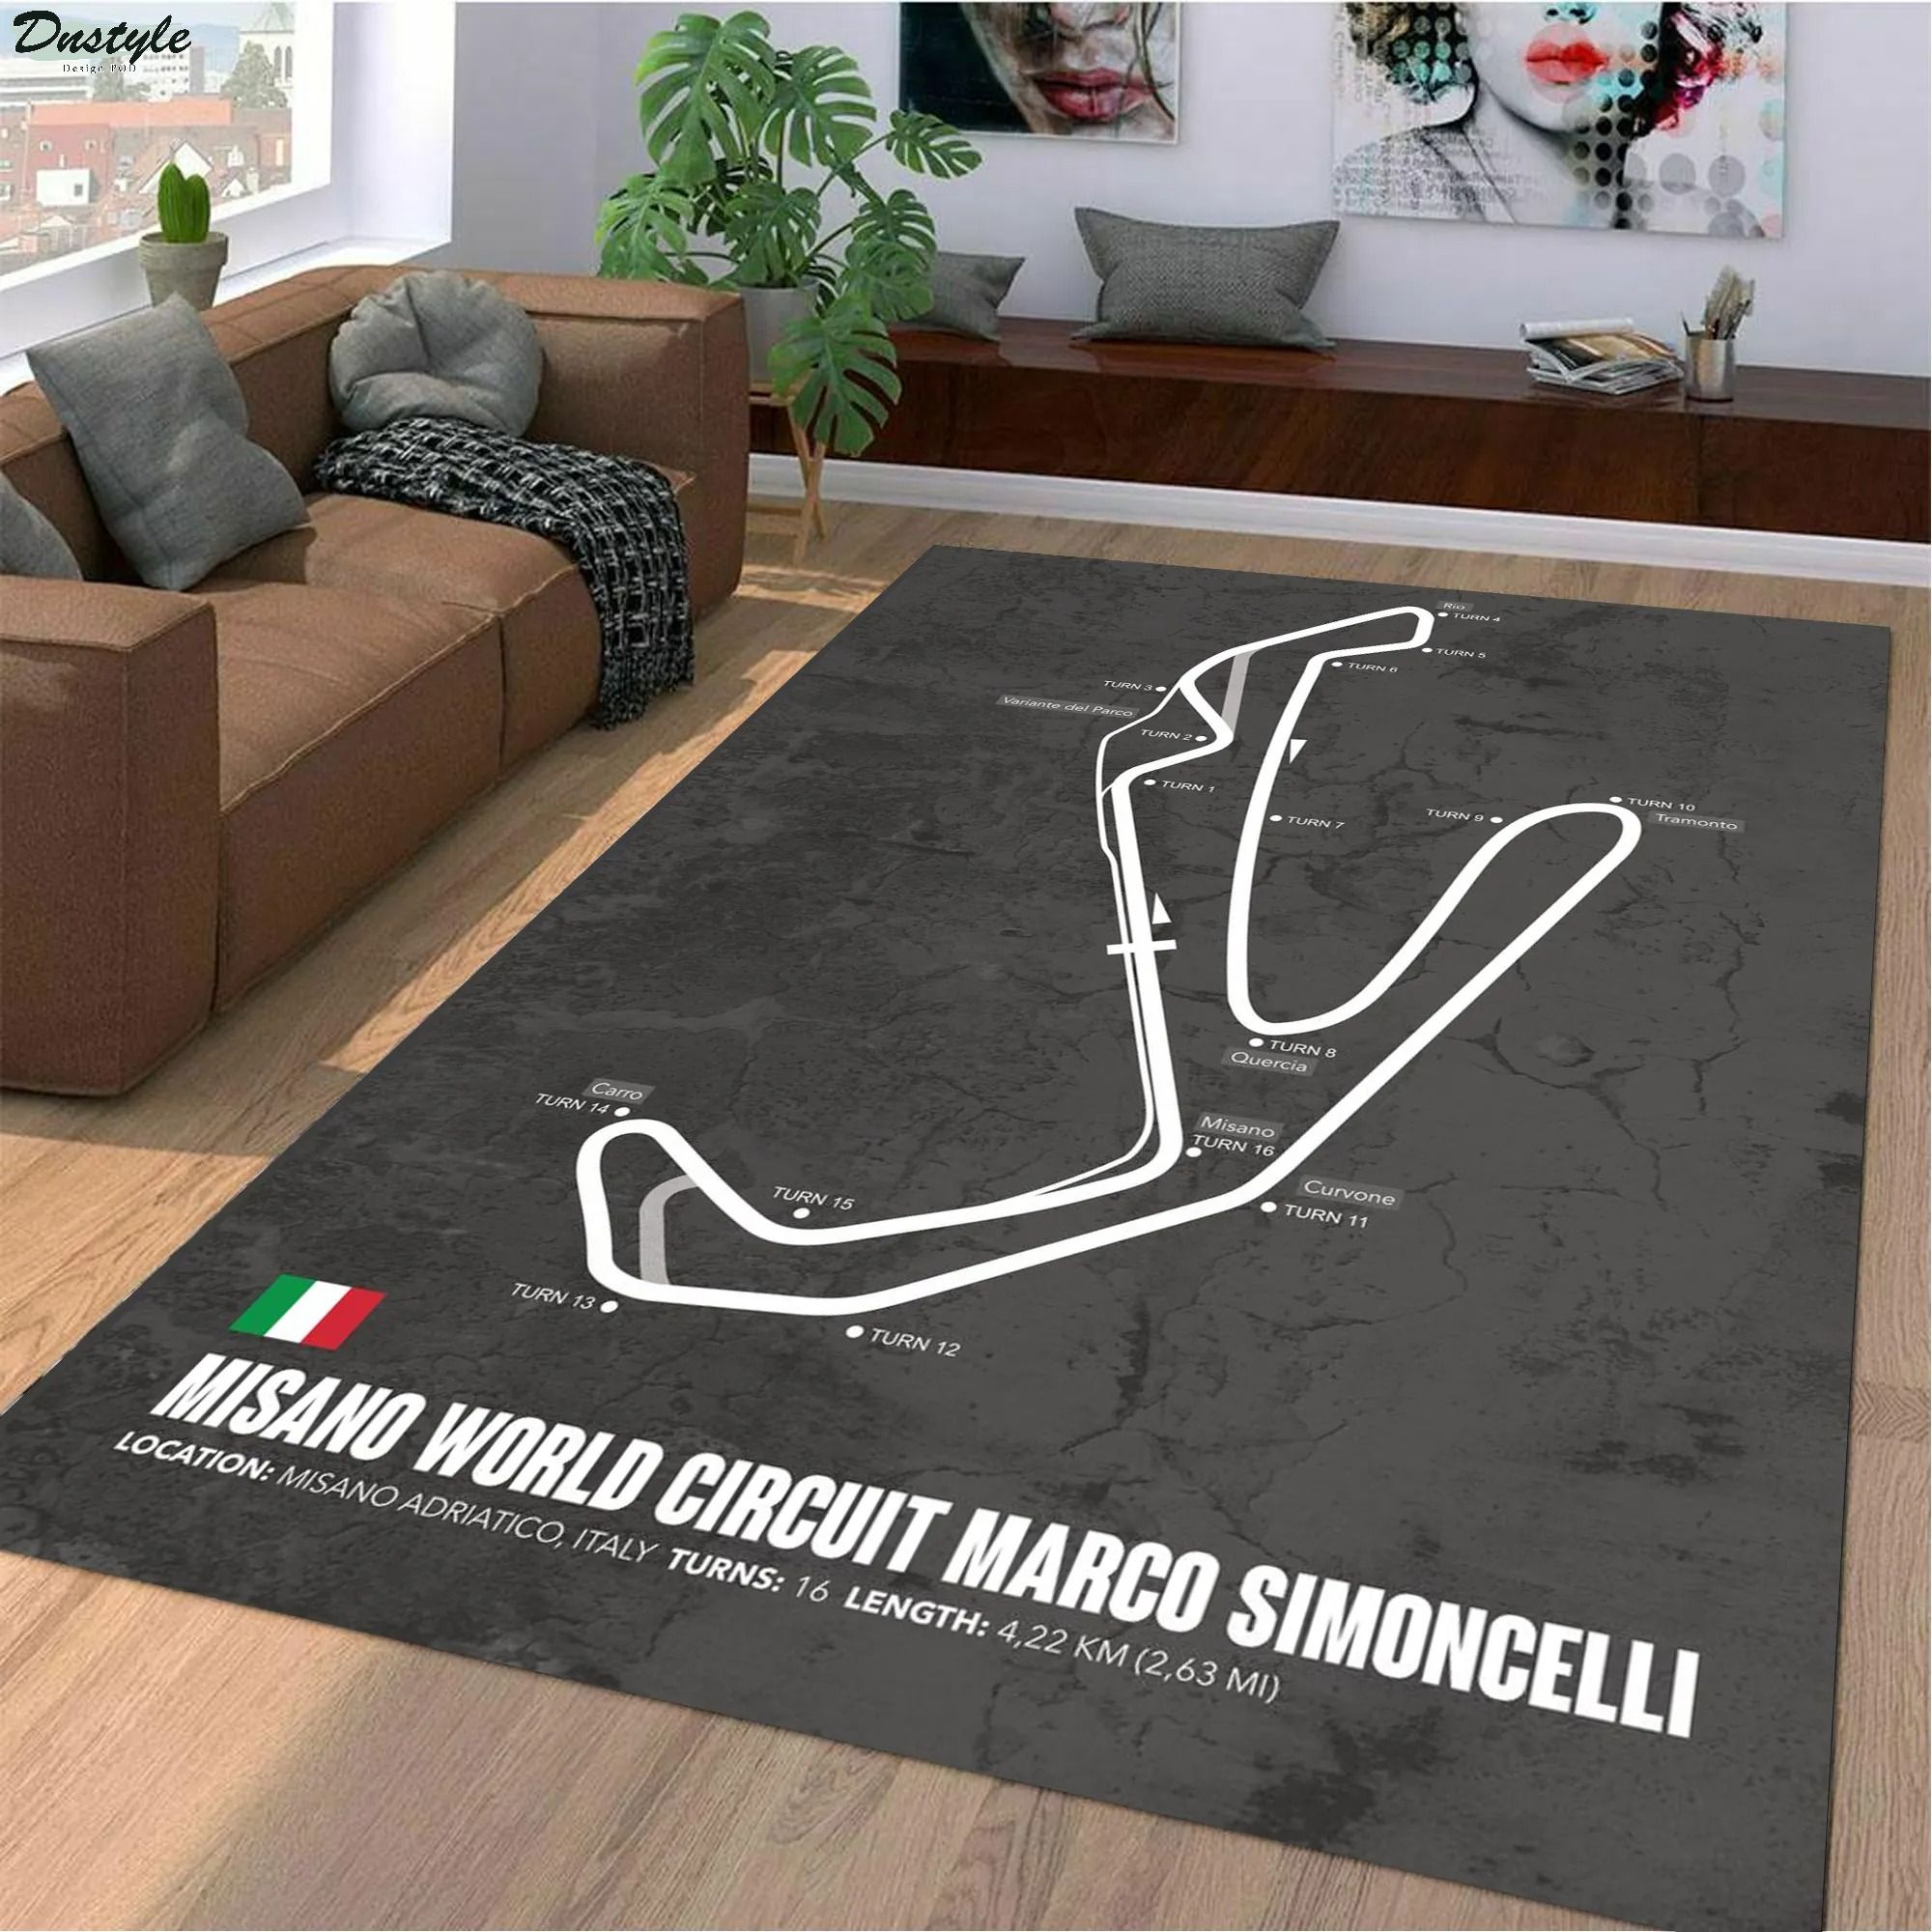 Misano world circuit marco simoncelli f1 track rug